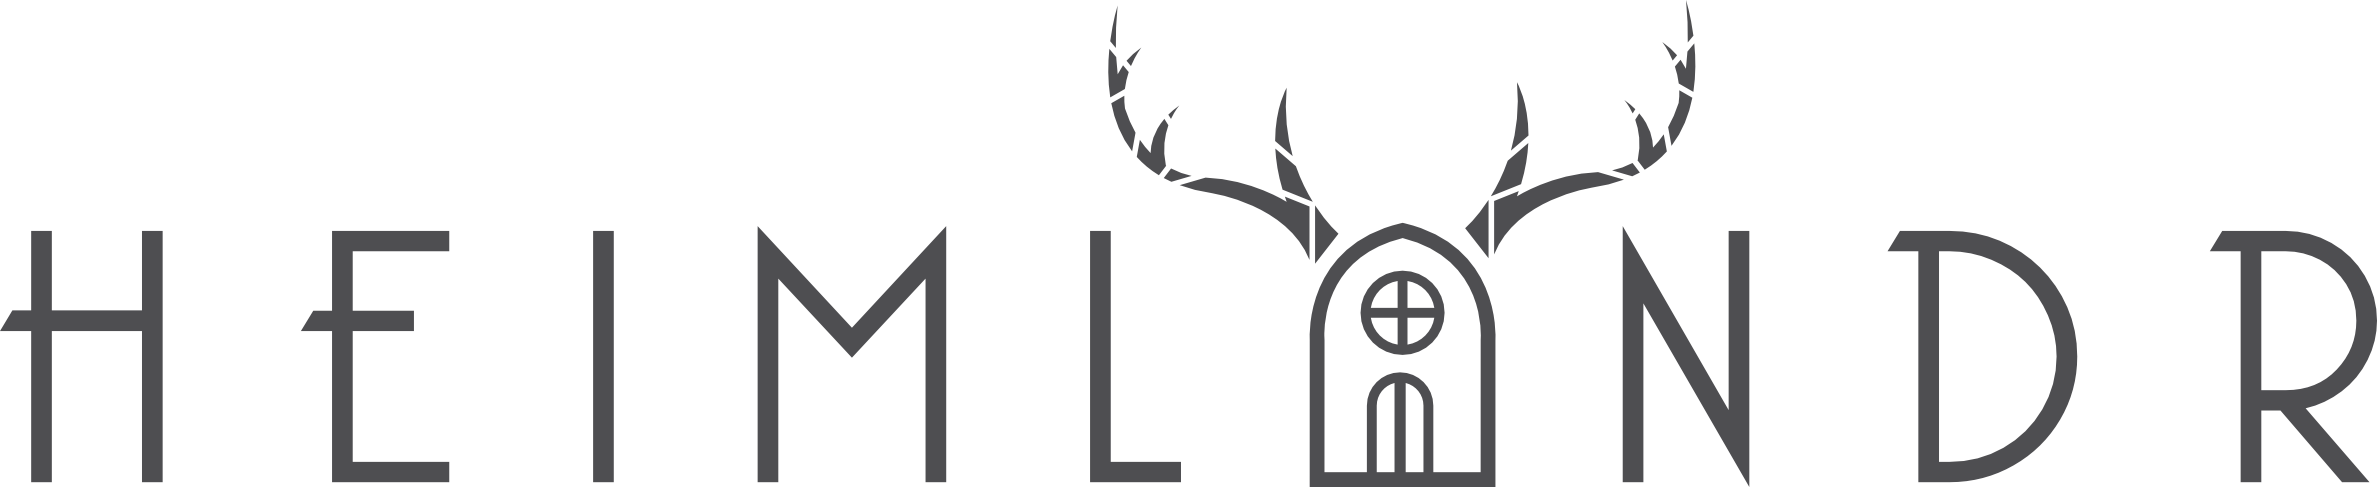 HEIMLANDR Logo